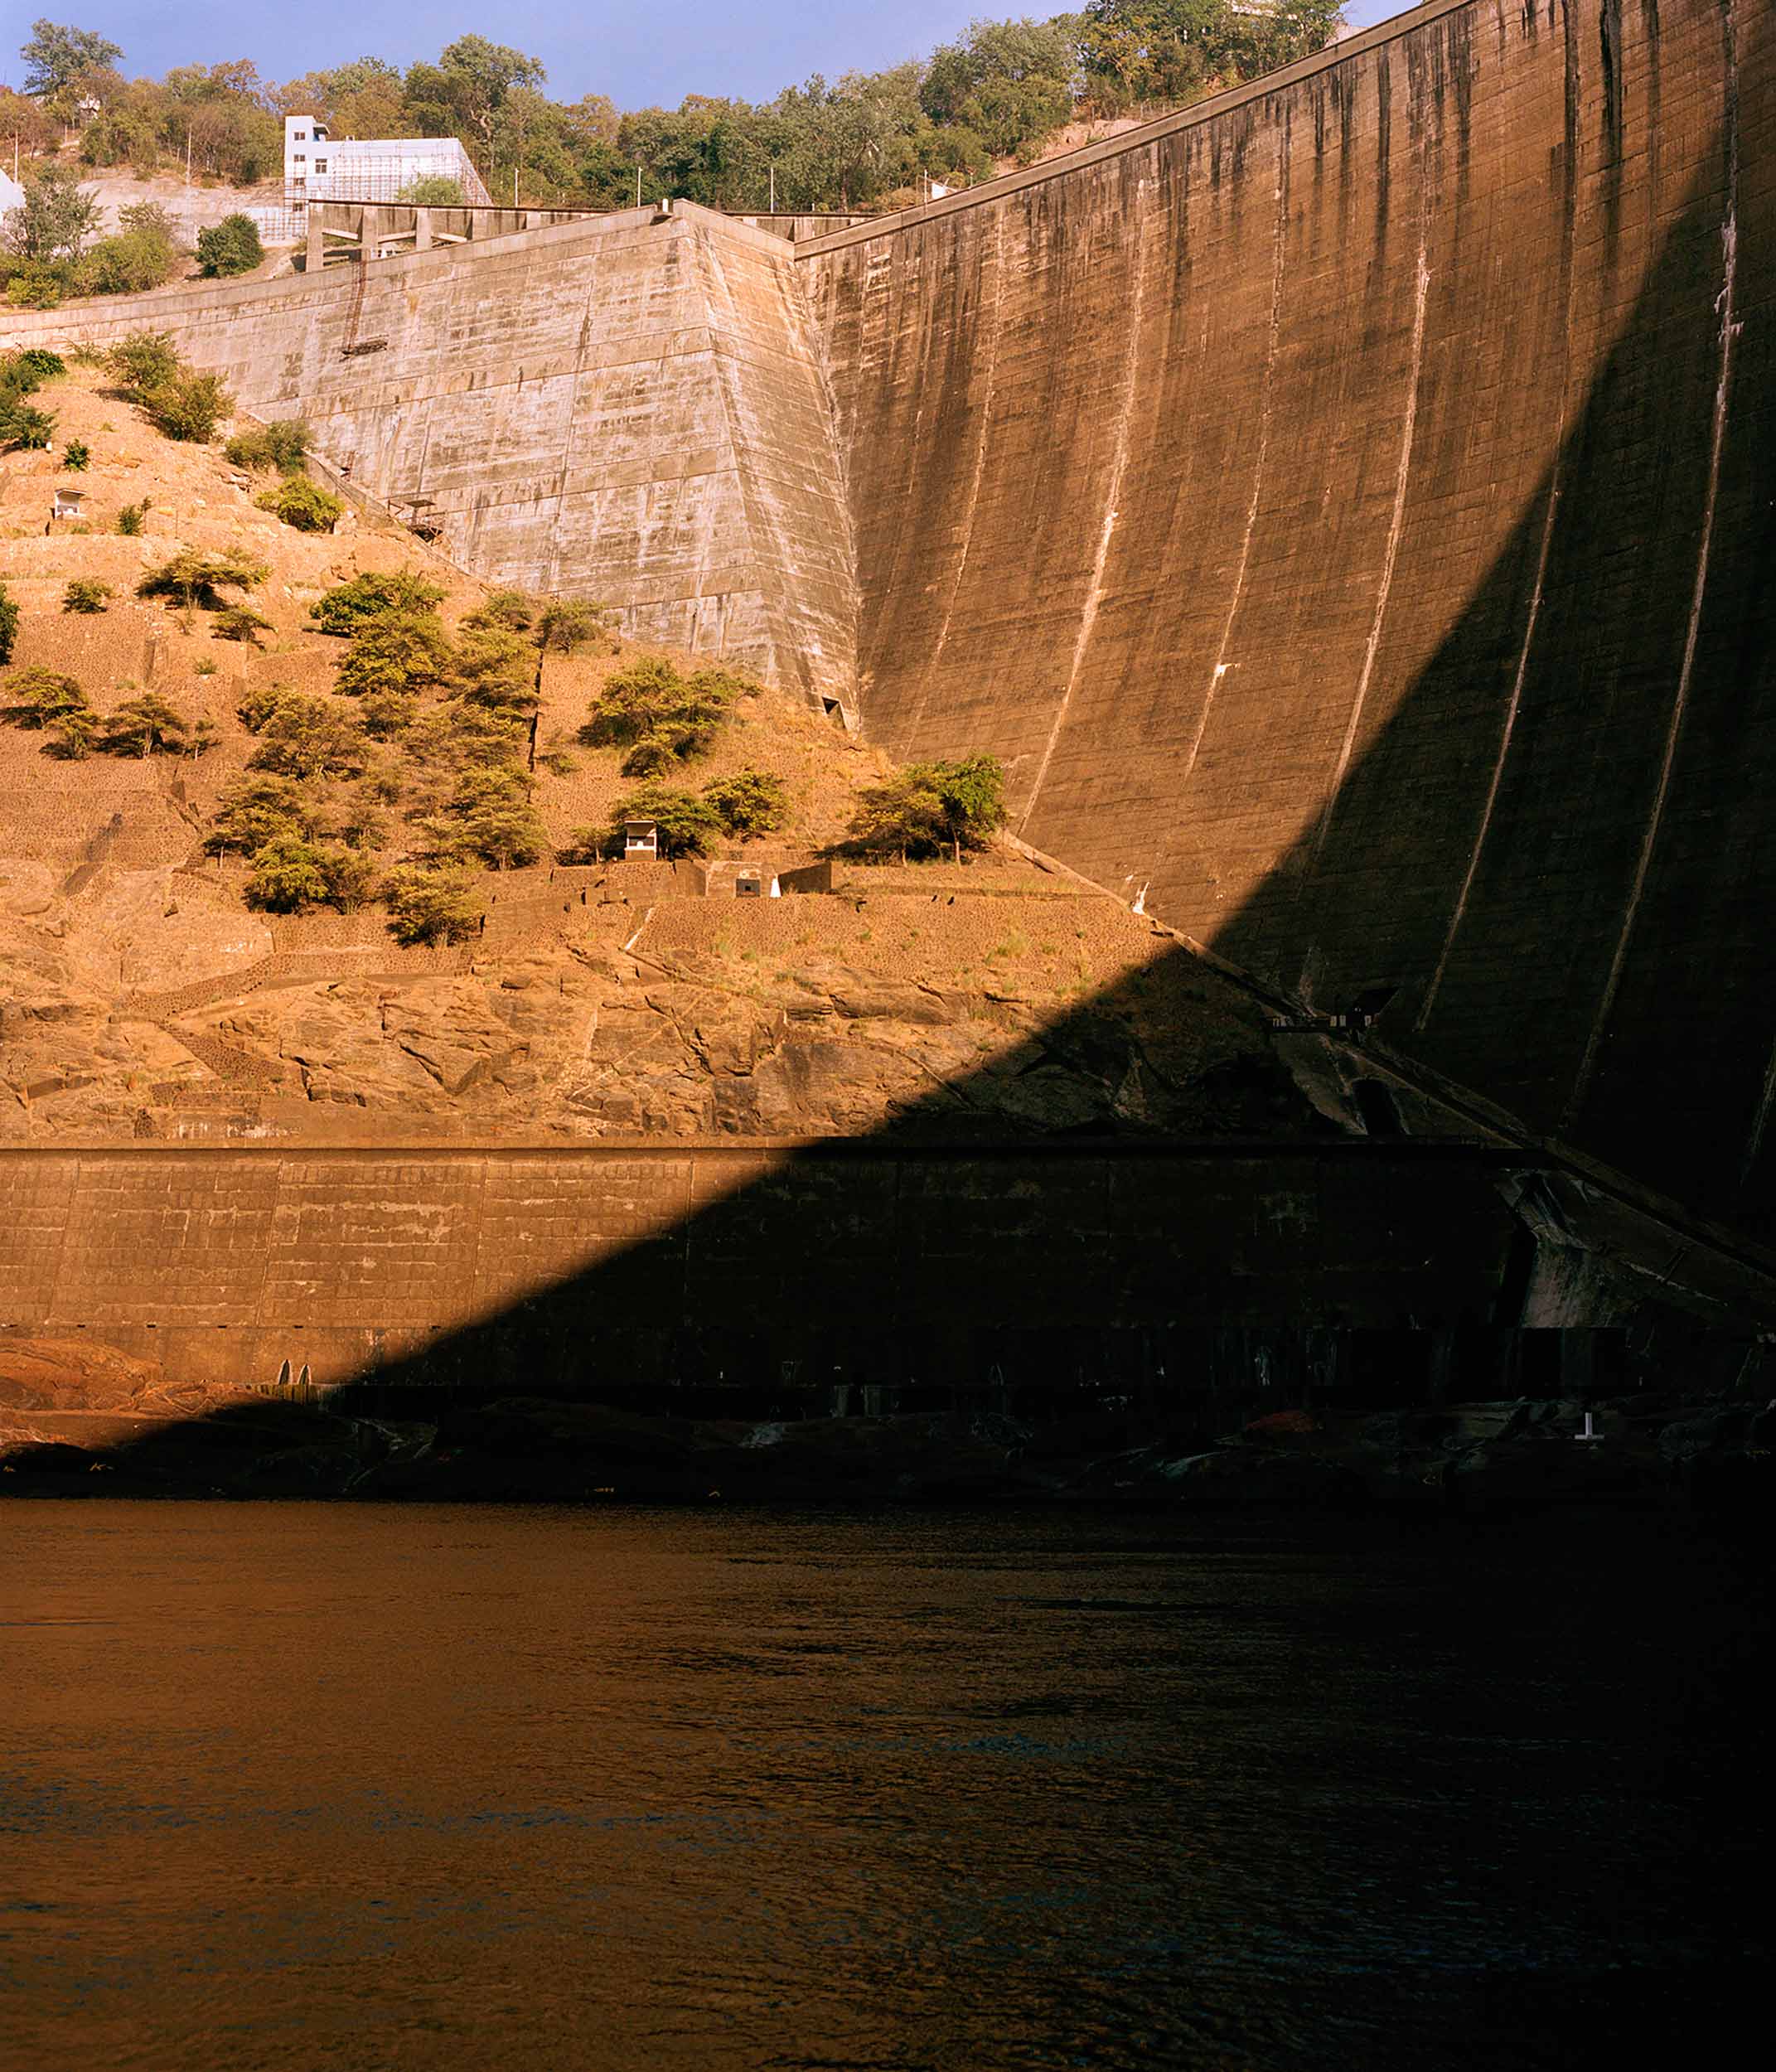 Below The Dam Wall, 2019